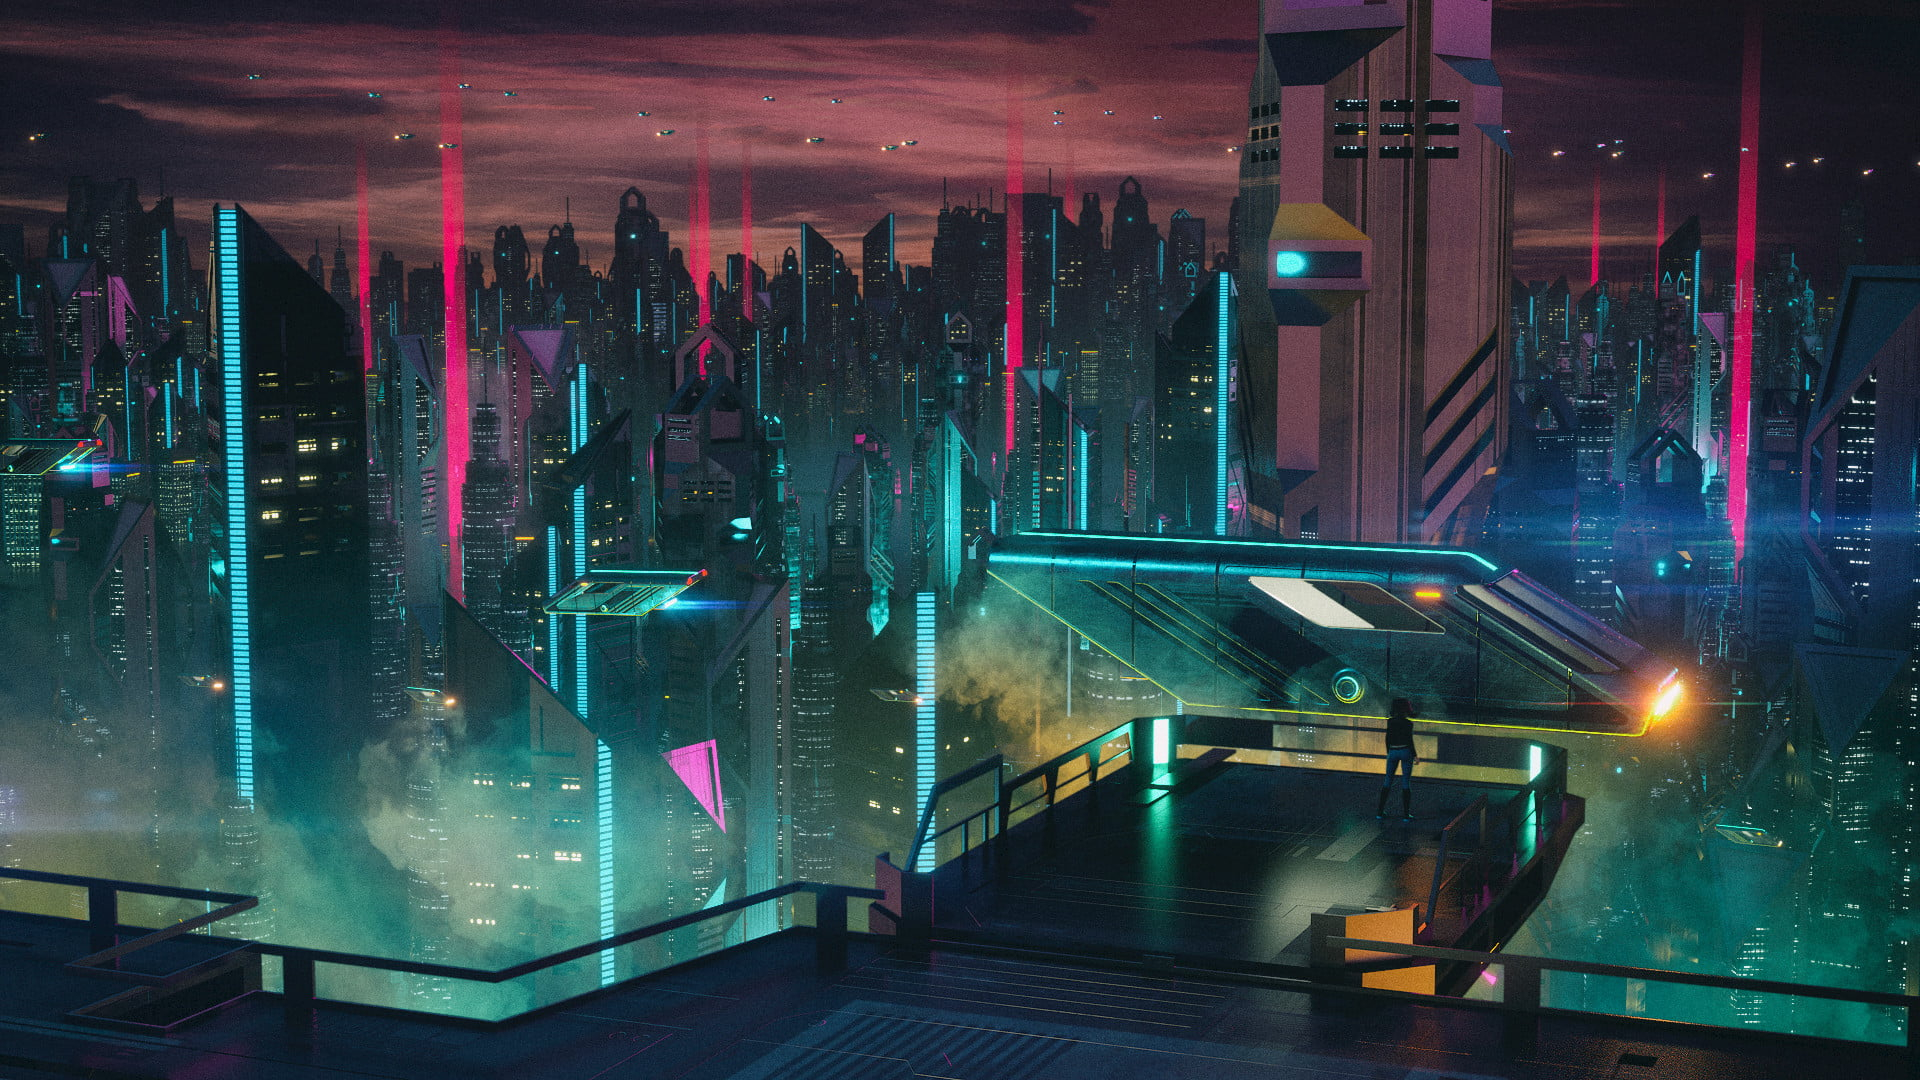 Futuristic city illustration wallpaper, aniamted city skyline, science fiction